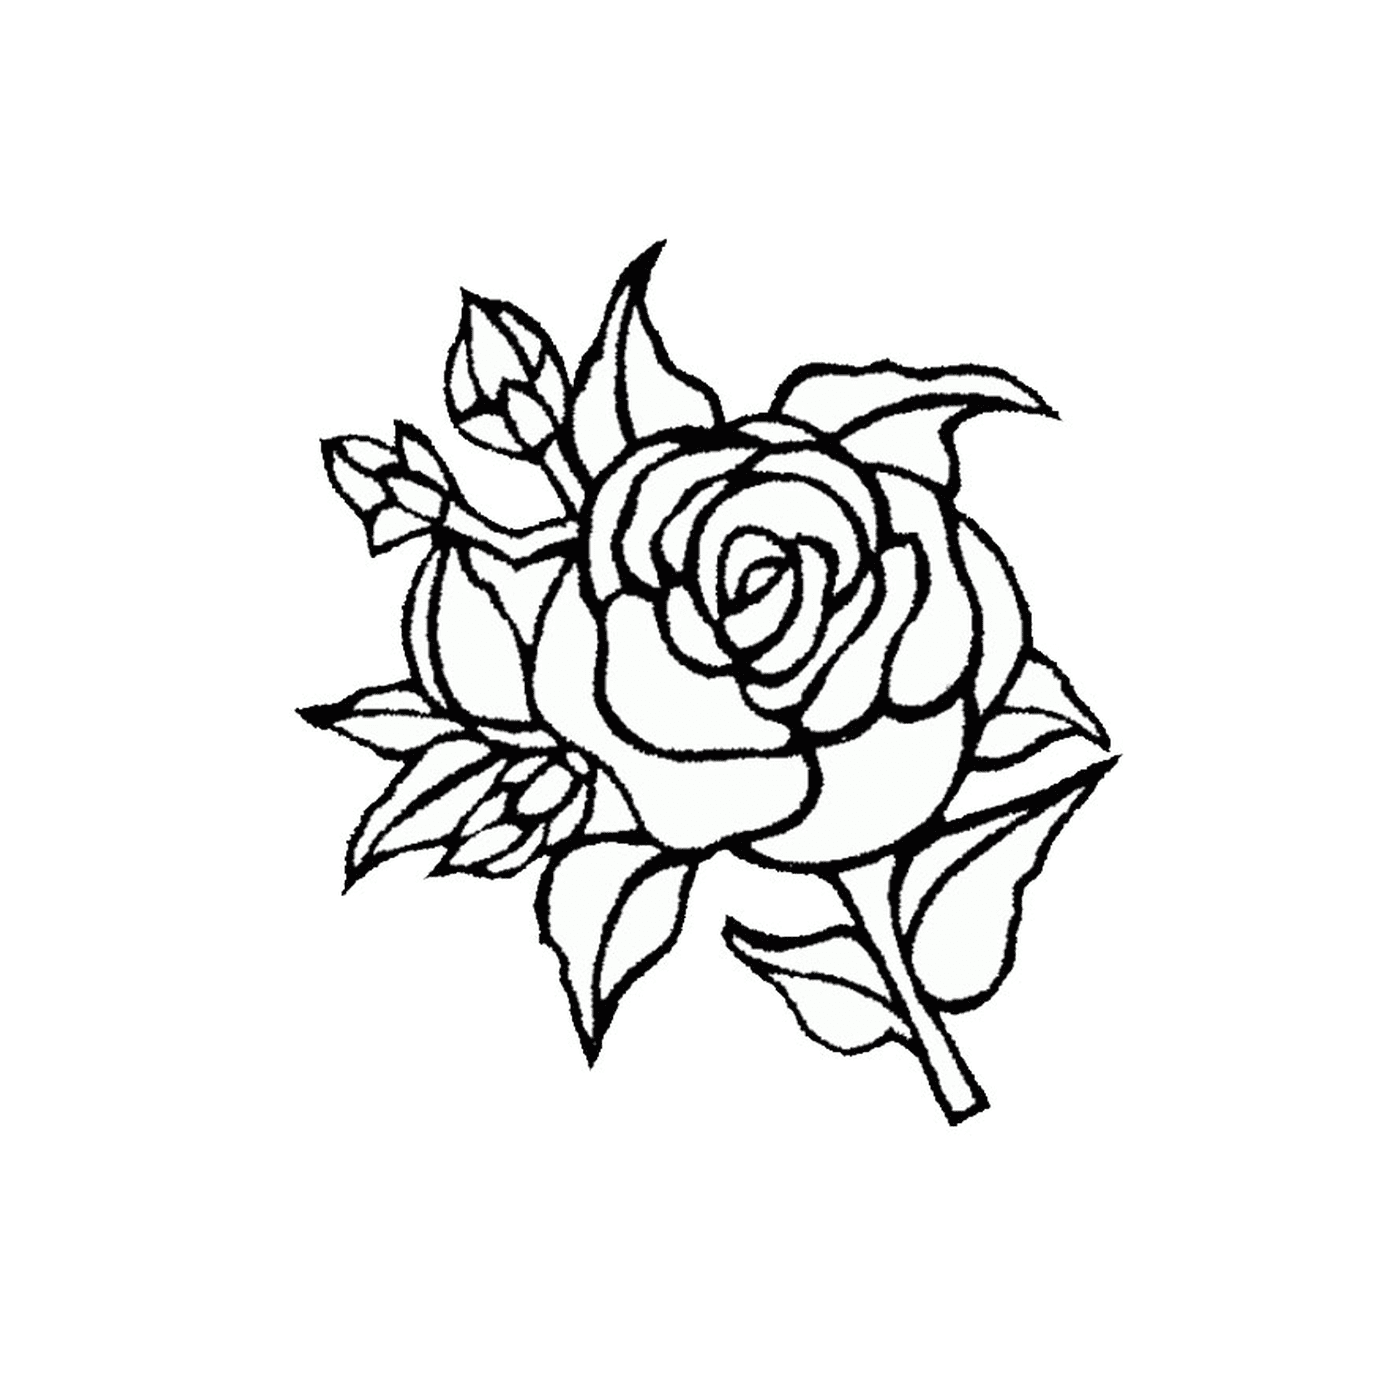  A beautiful rose 